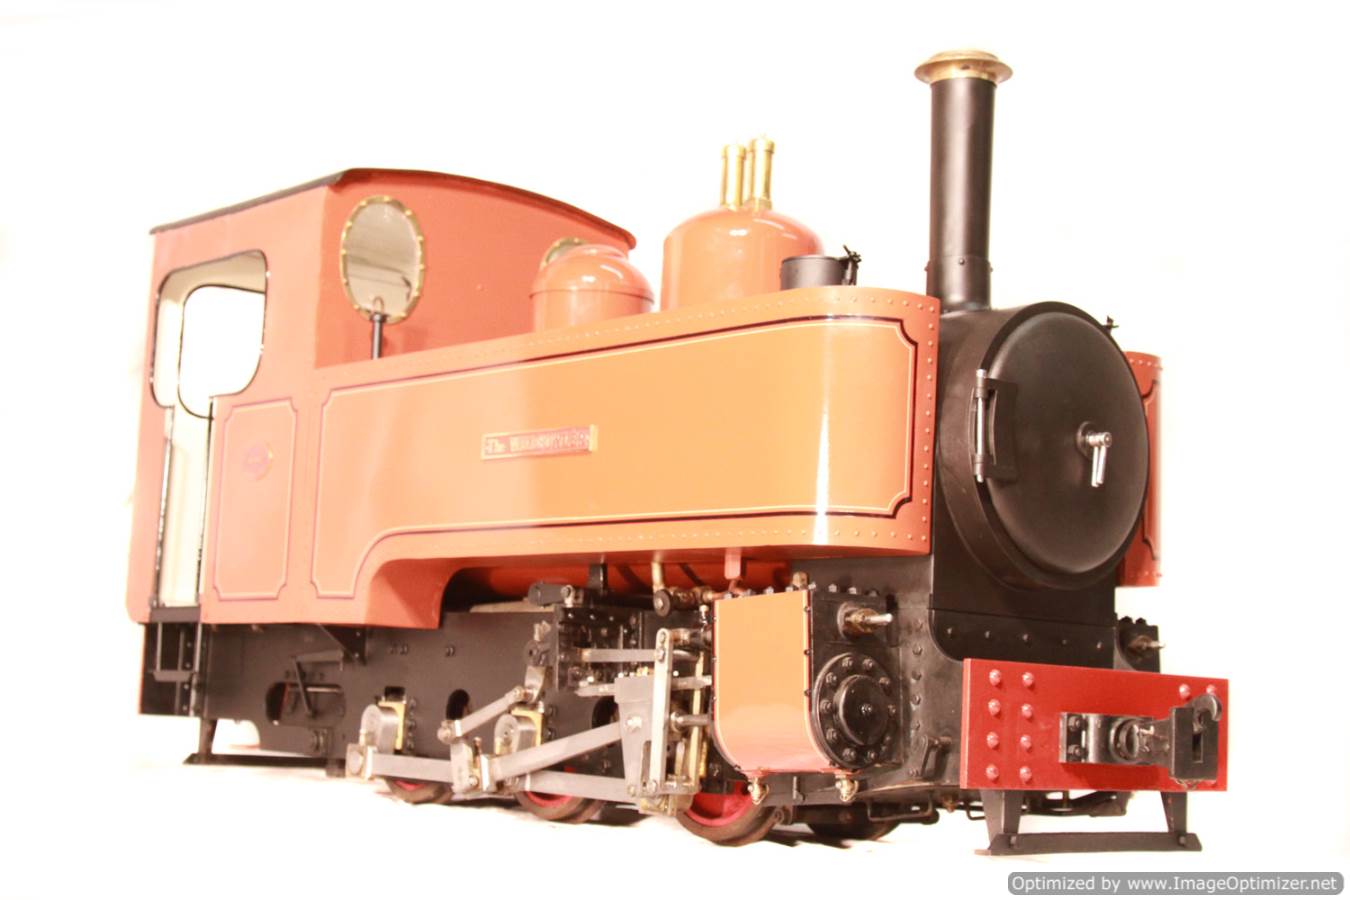 test 5 inch Gauge Fowler Live Steam Locomotive for sale 05 Optimized